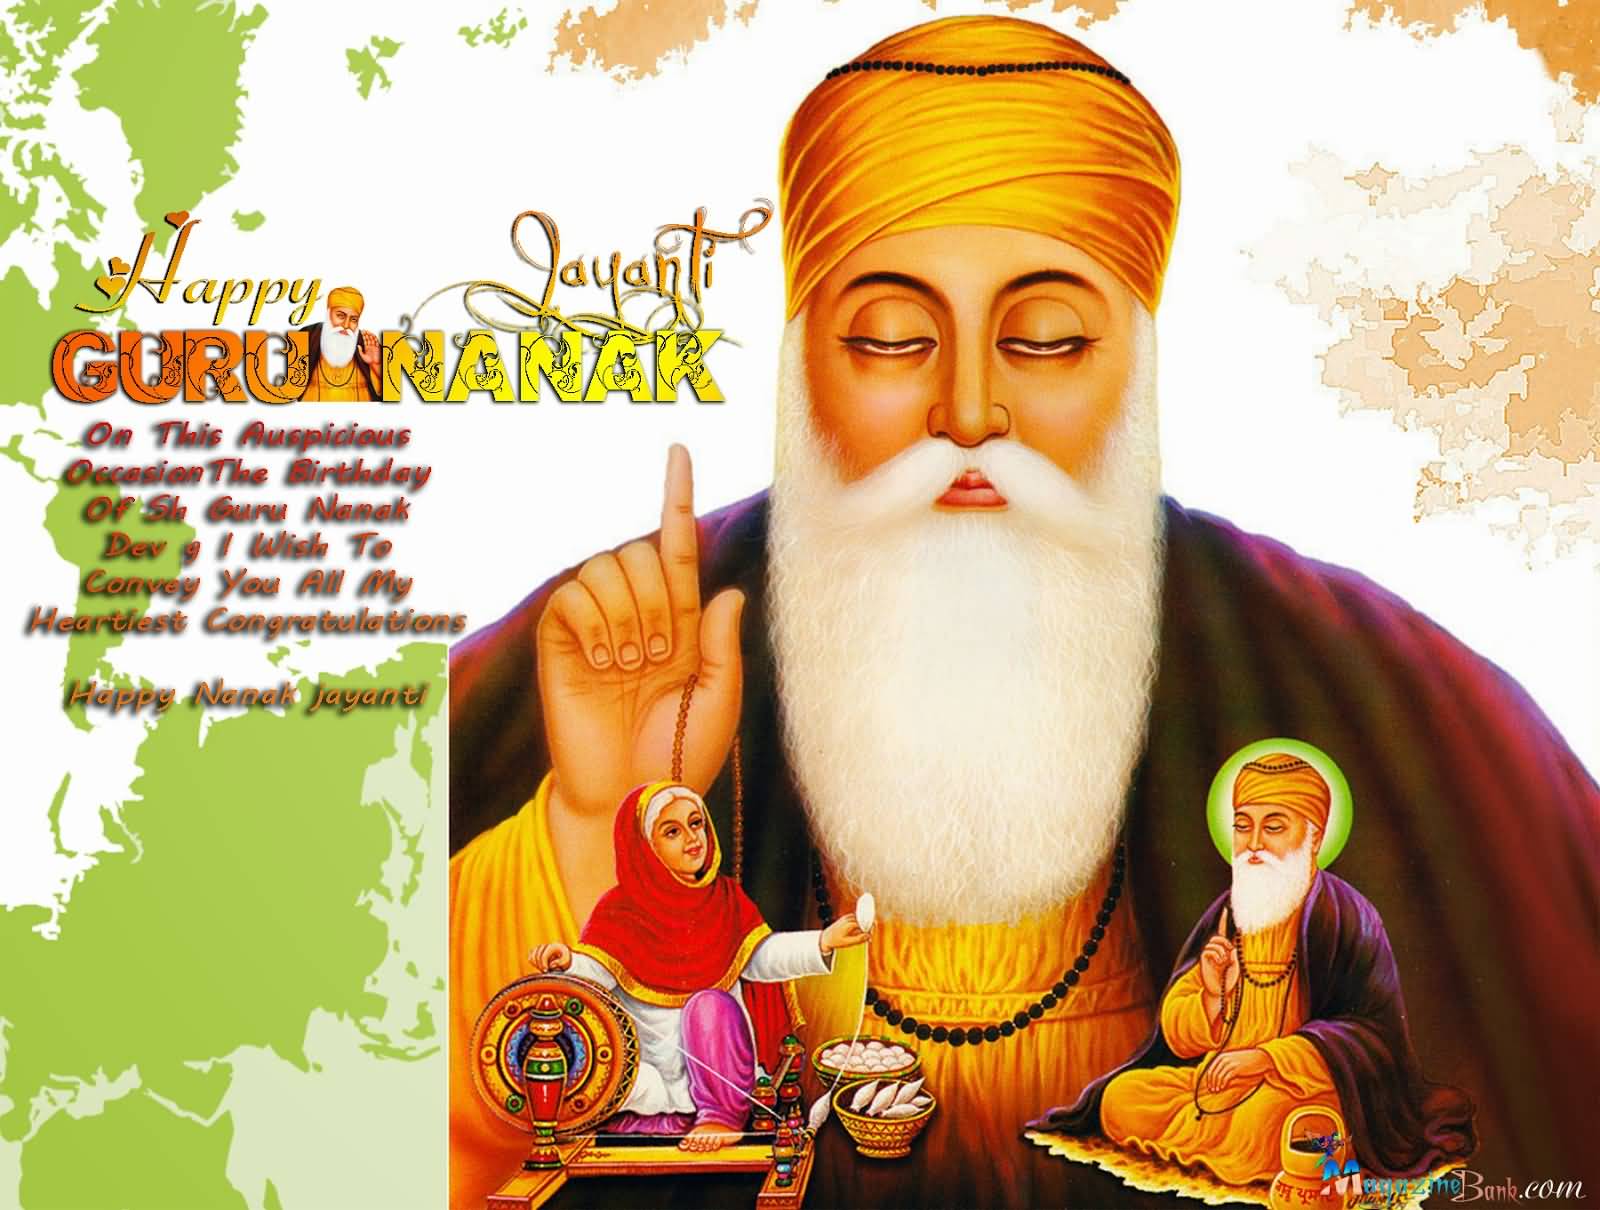 Happy Guru Nanak Jayanti On This Auspicious Occasion The Birthday Of Sh Guru Nanak Dev I Wish To Convey You All The Heartiest Congratulations Happy Guru Nanak Jayanti